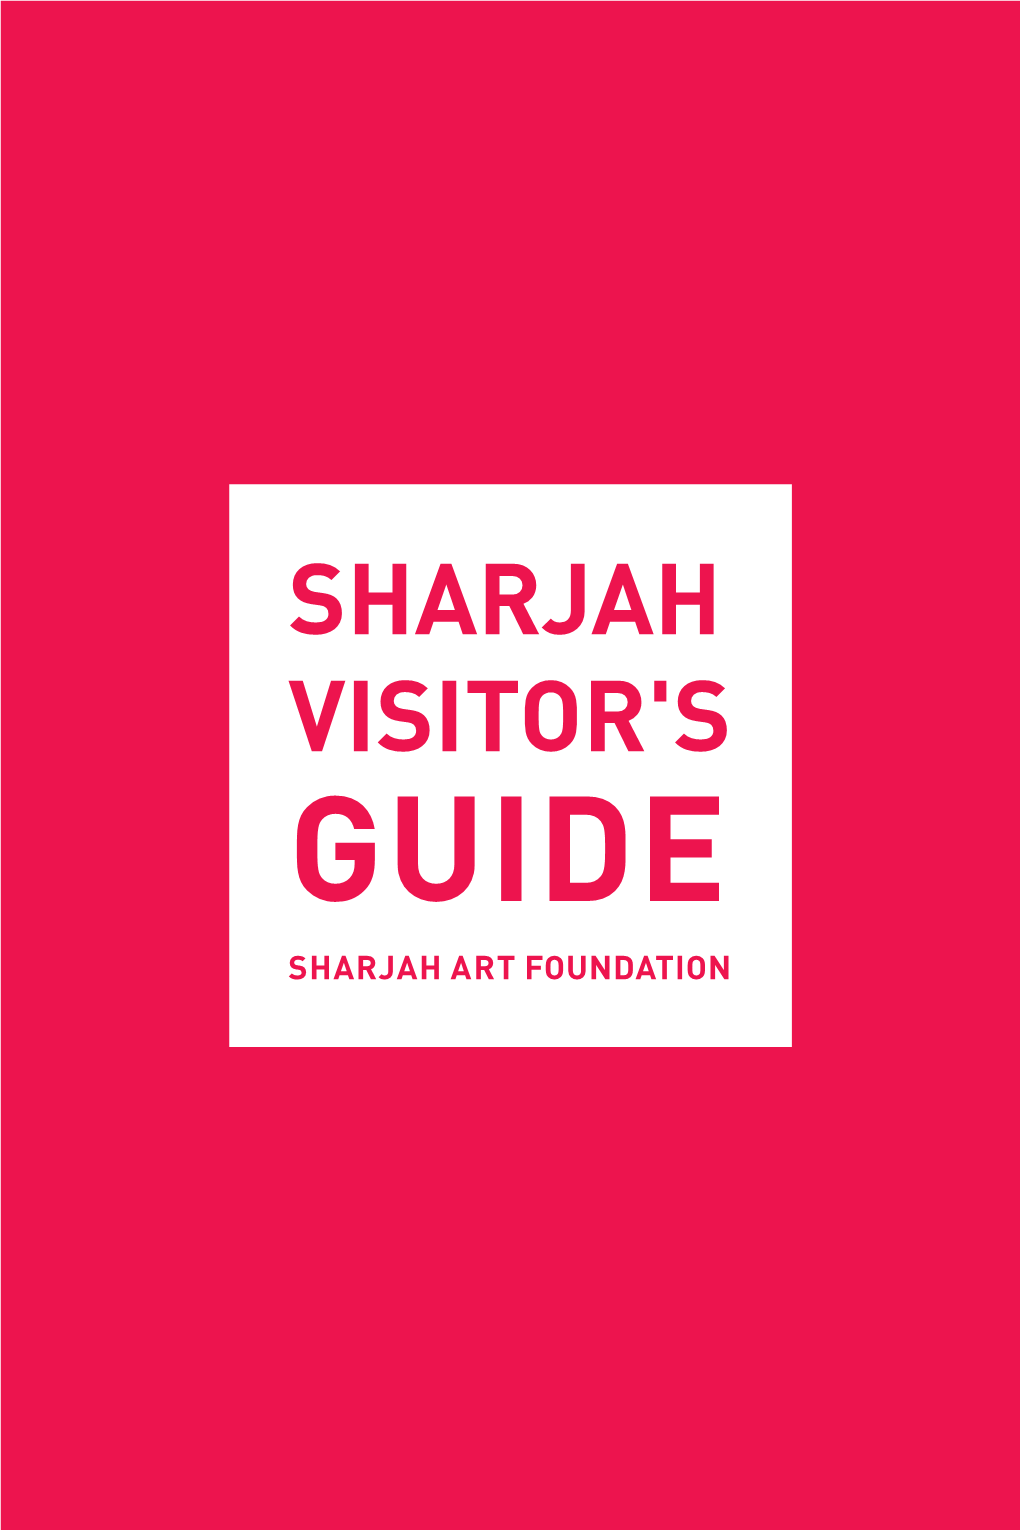 SHARJAH VISITOR's GUIDE SHARJAH ART FOUNDATION Sharjah Art Foundation Has Compiled an Insider’S Guide to Sharjah City